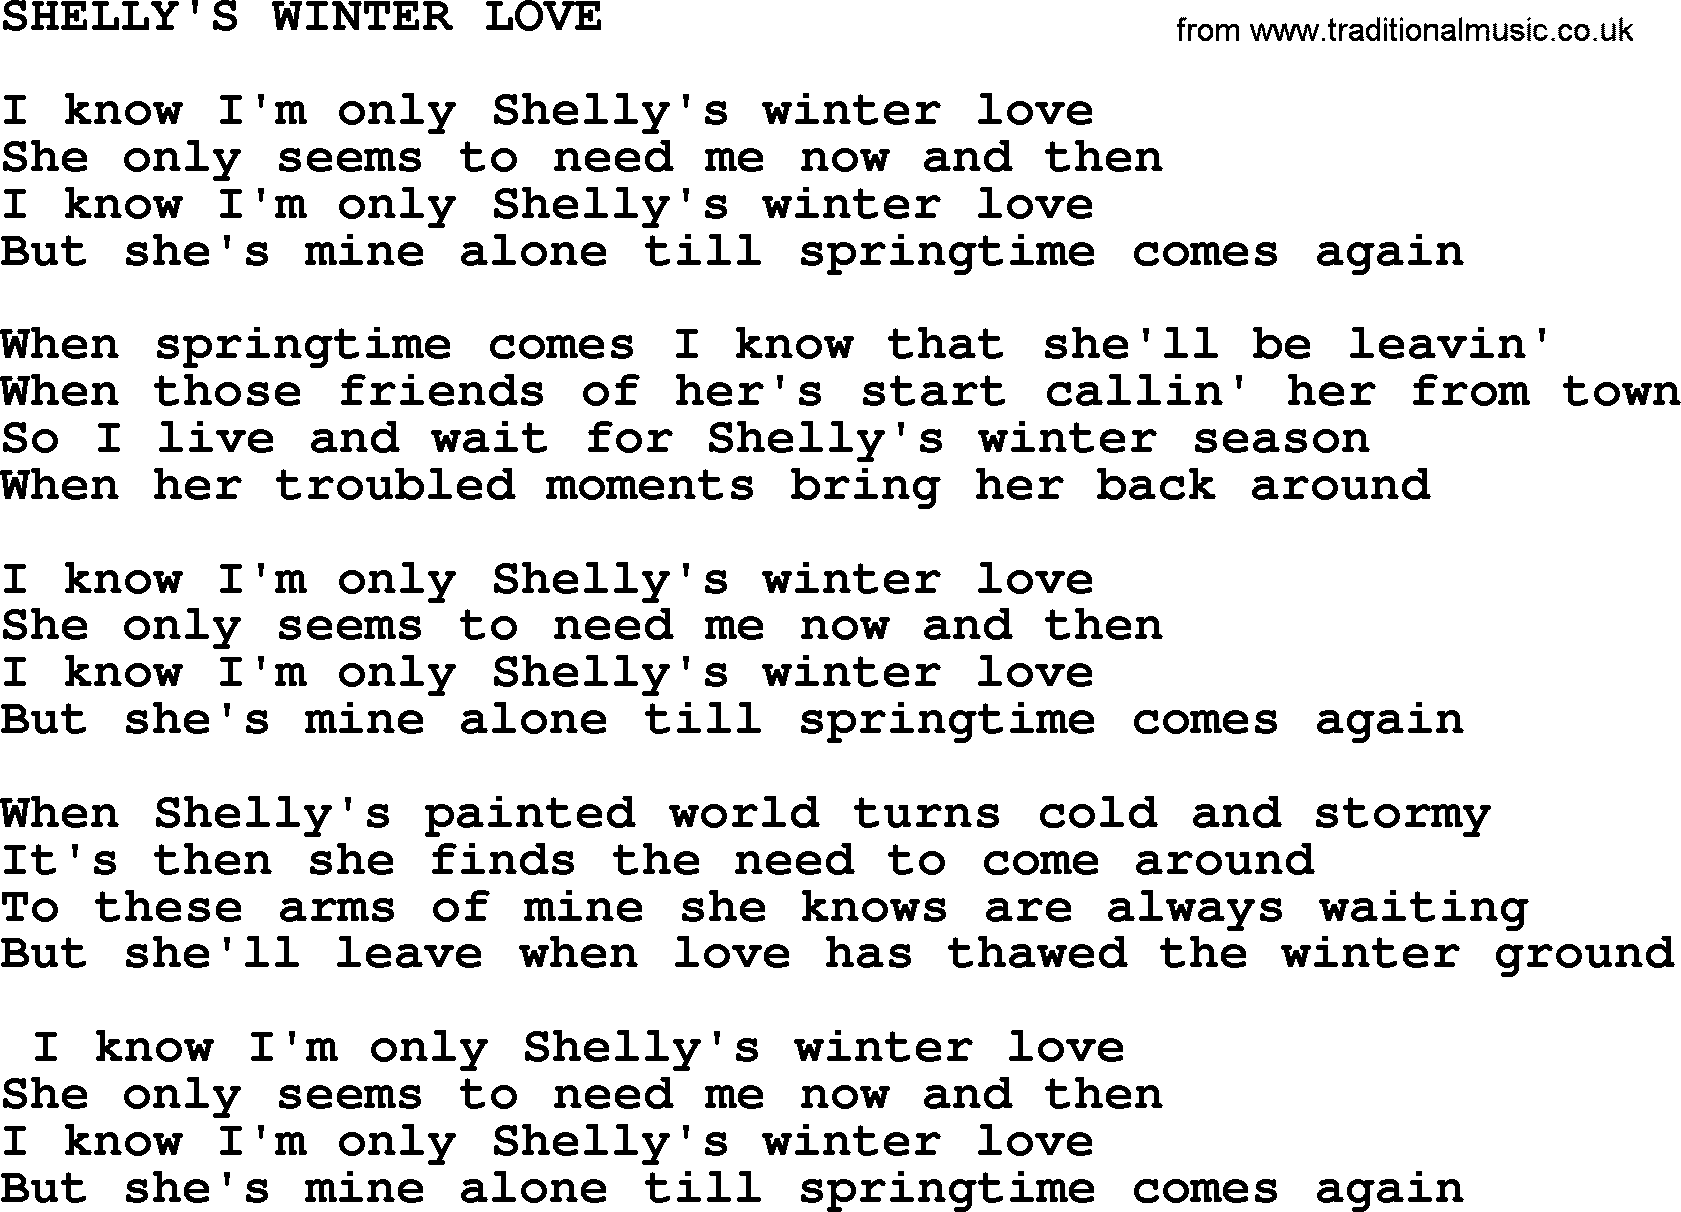 Merle Haggard song: Shelly's Winter Love, lyrics.